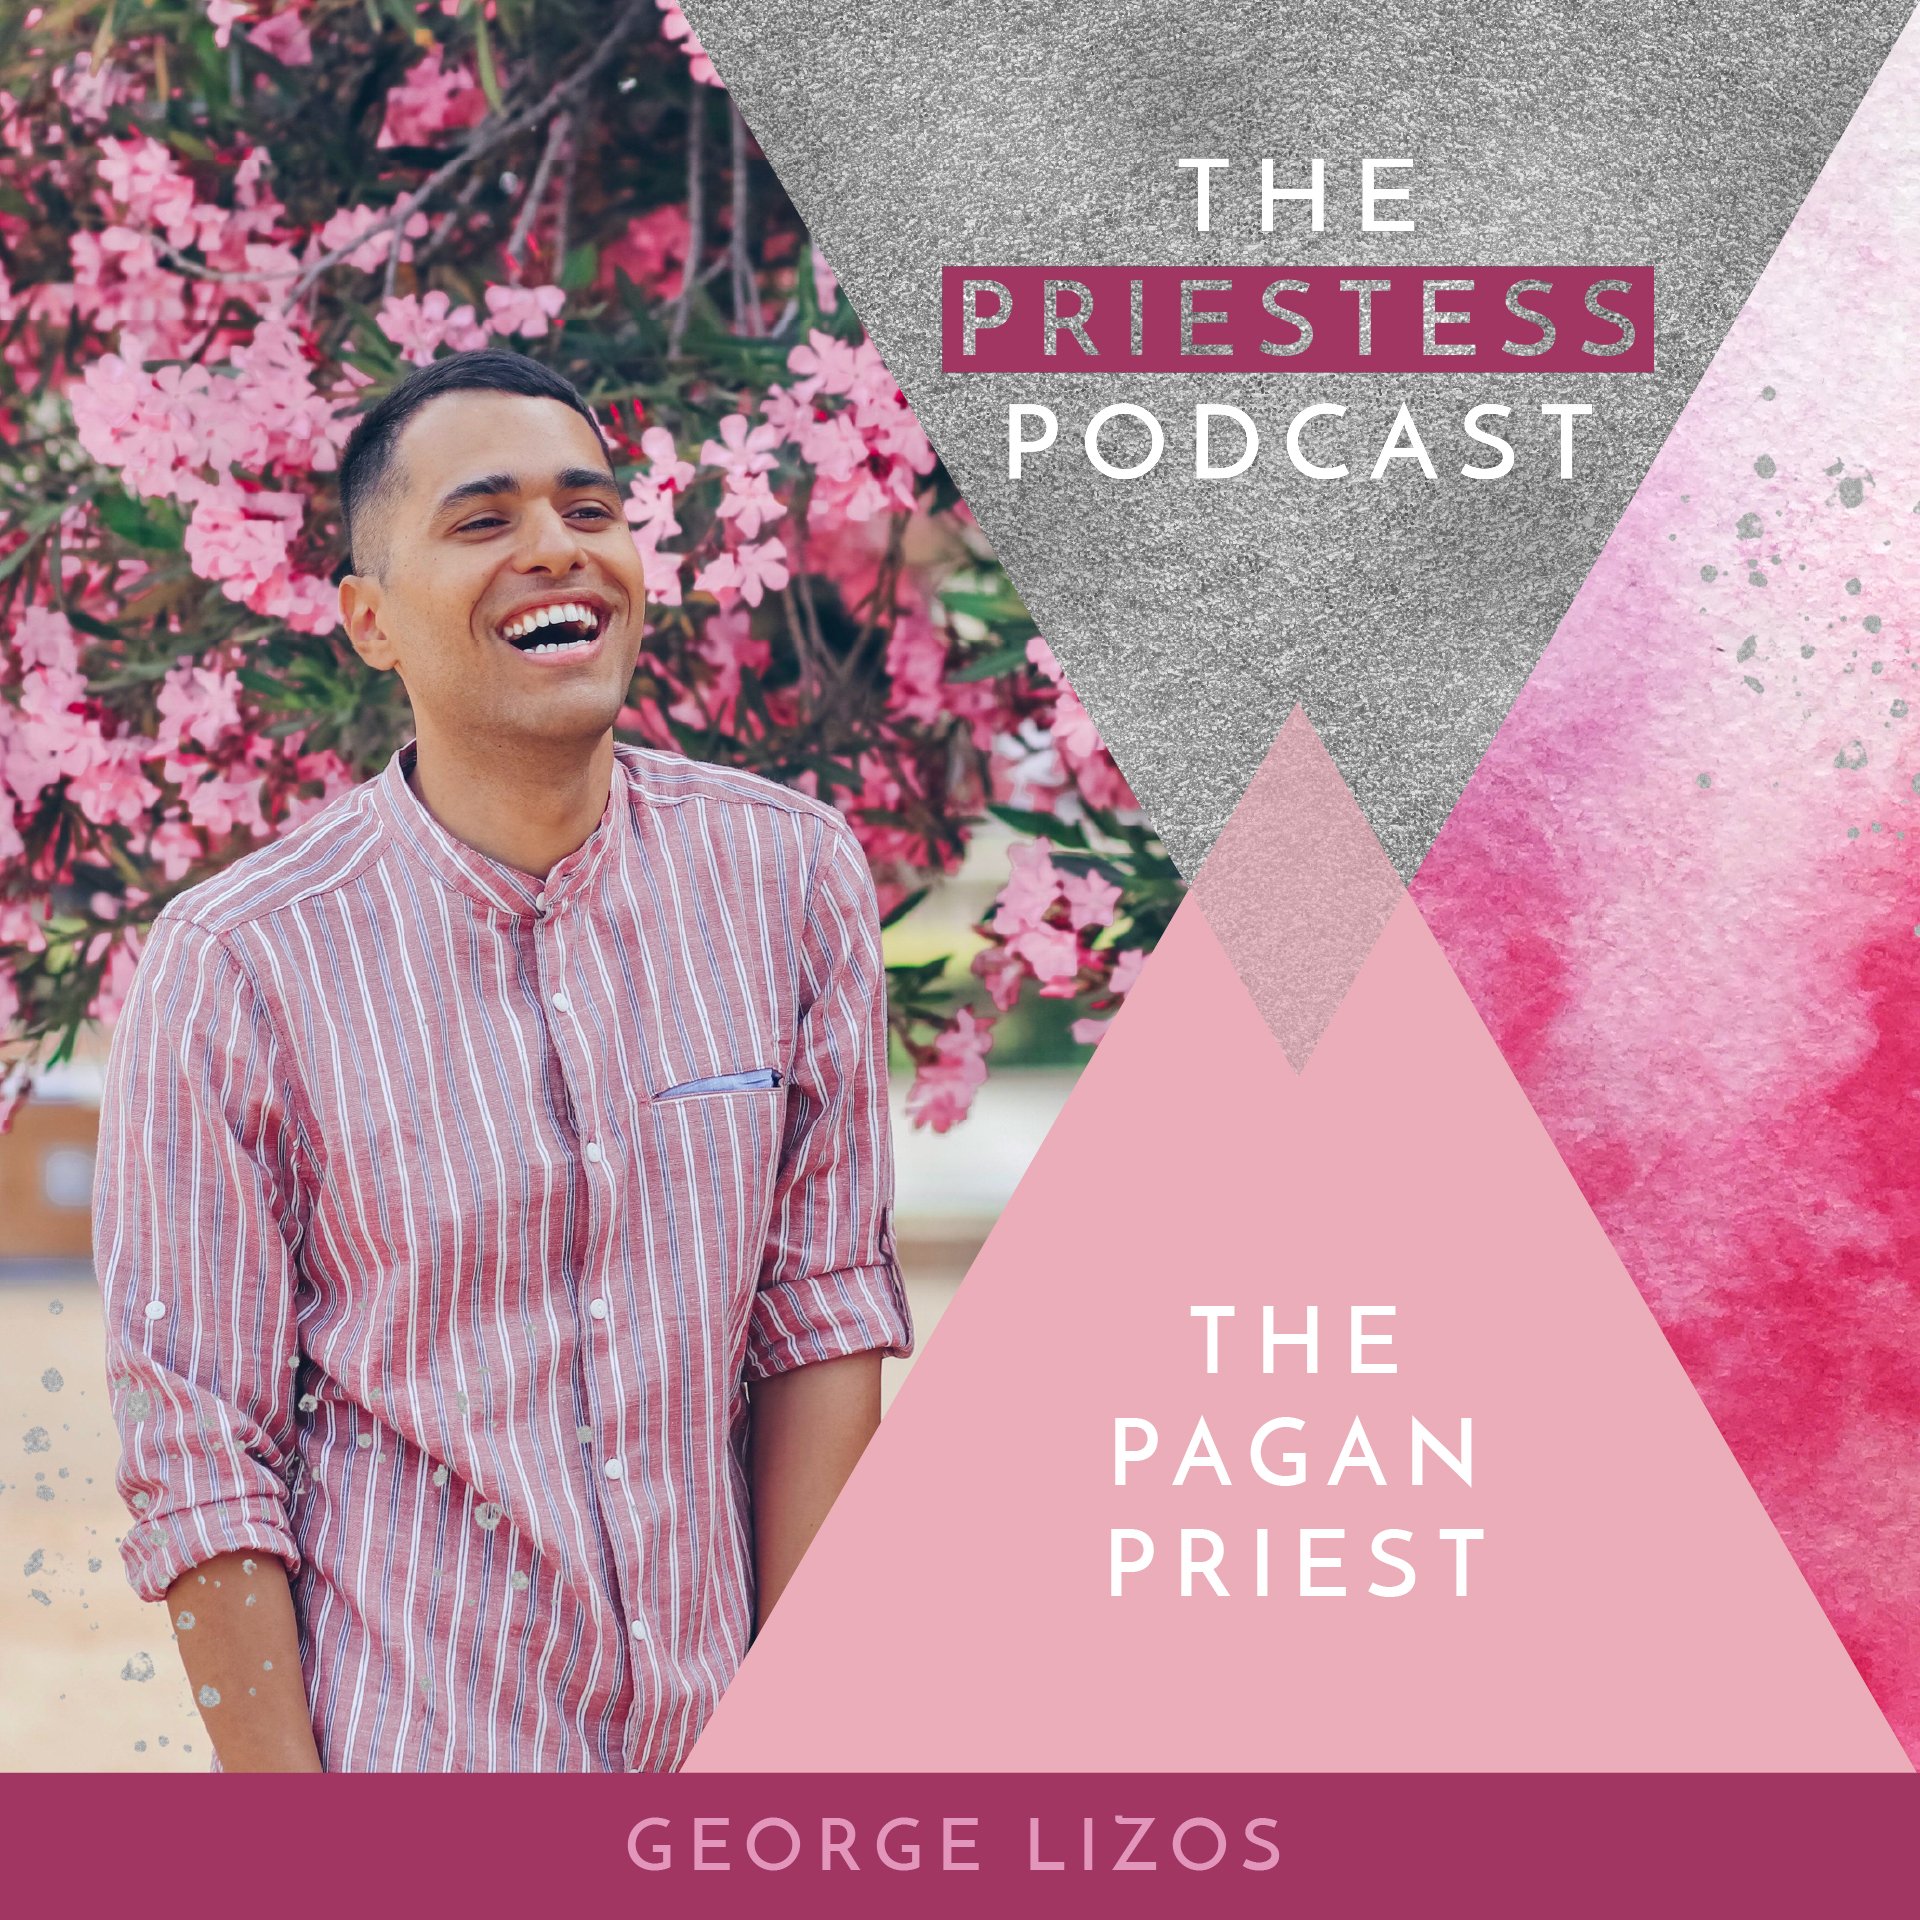 George Lizos on The Pagan Priest